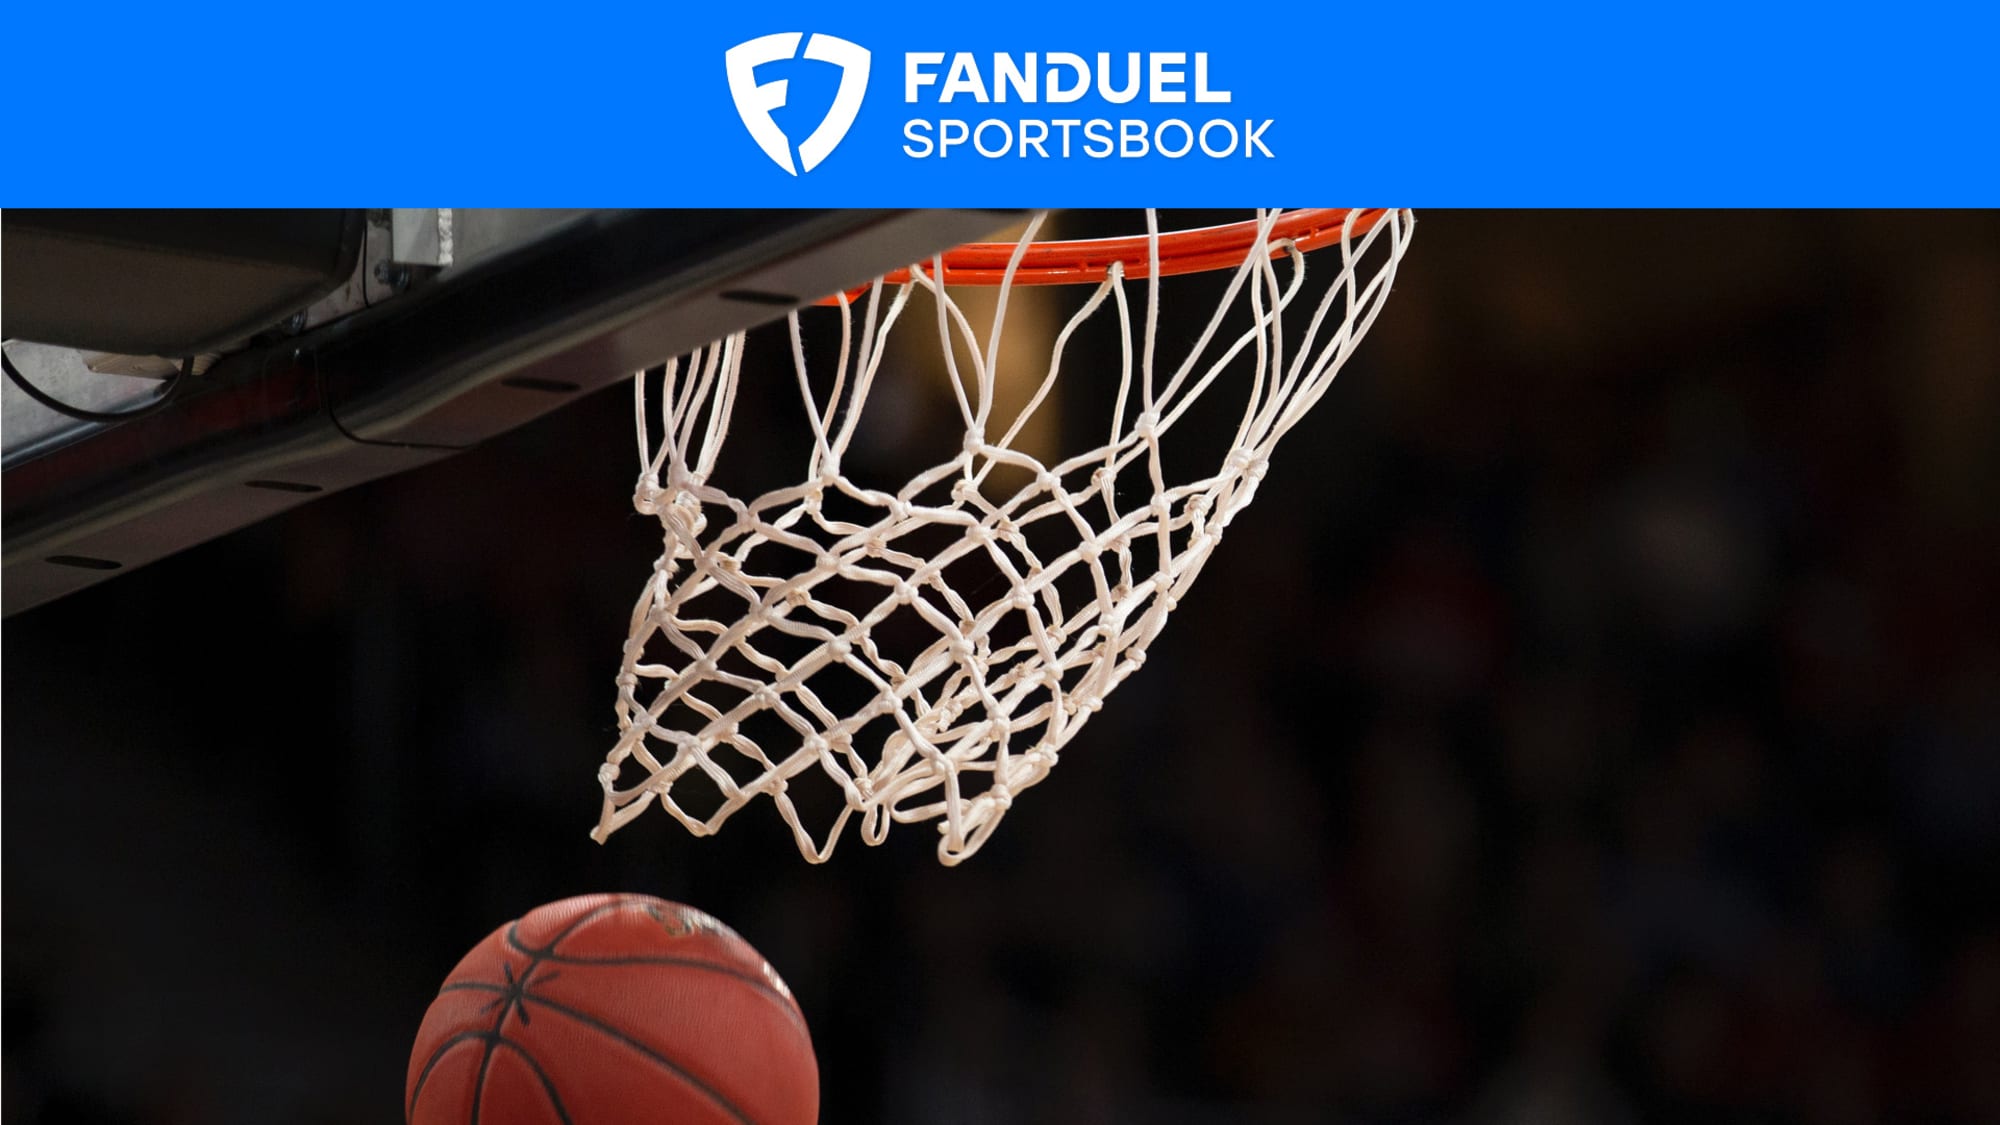 FanDuel Sportsbook Promo Code: Get $150 Bonus